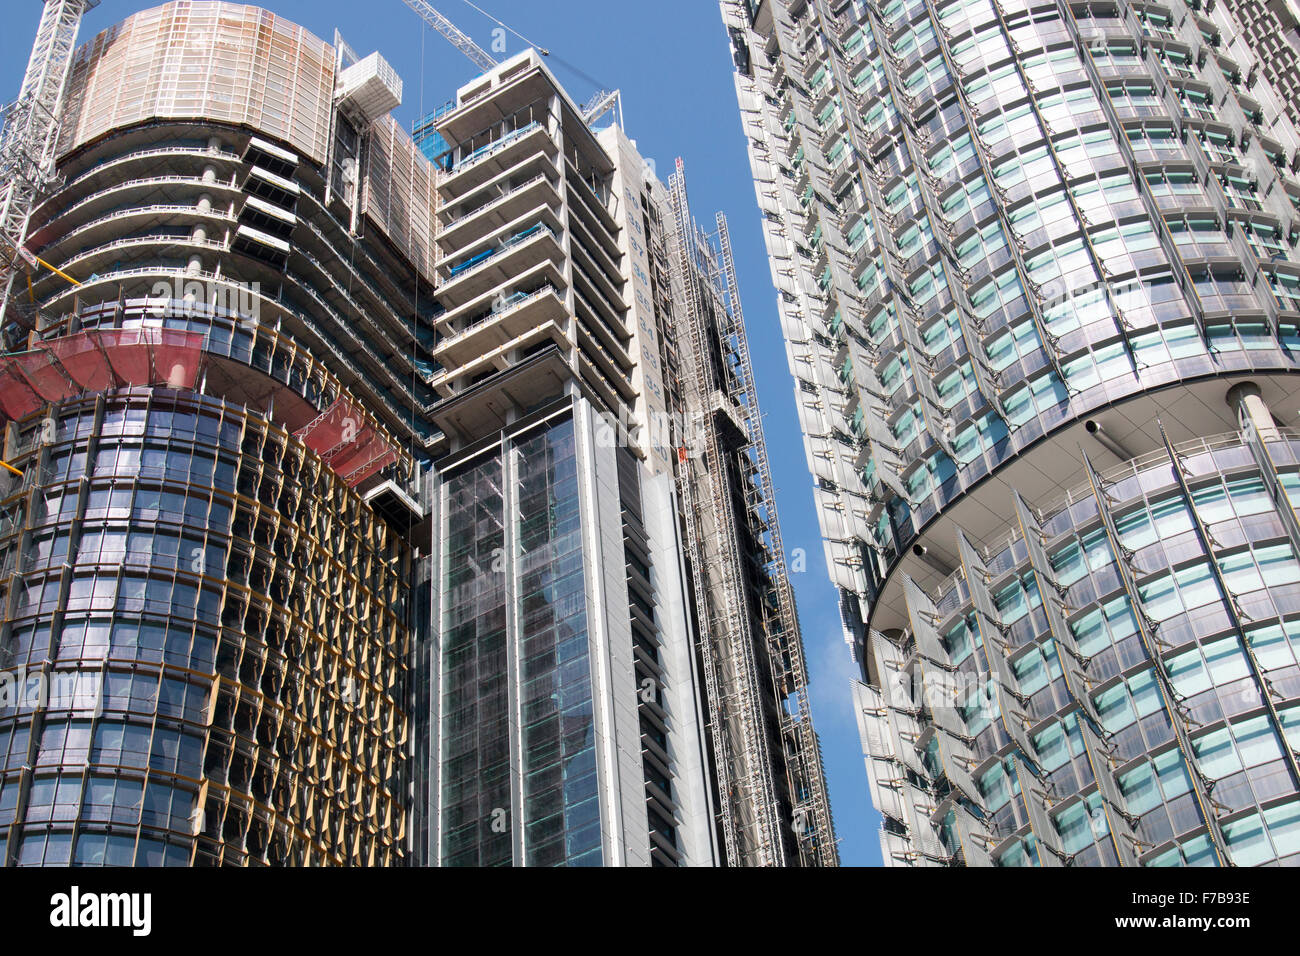 Construction of the skyscraper towers at Barangaroo urban development in Sydney city centre,Australia Stock Photo